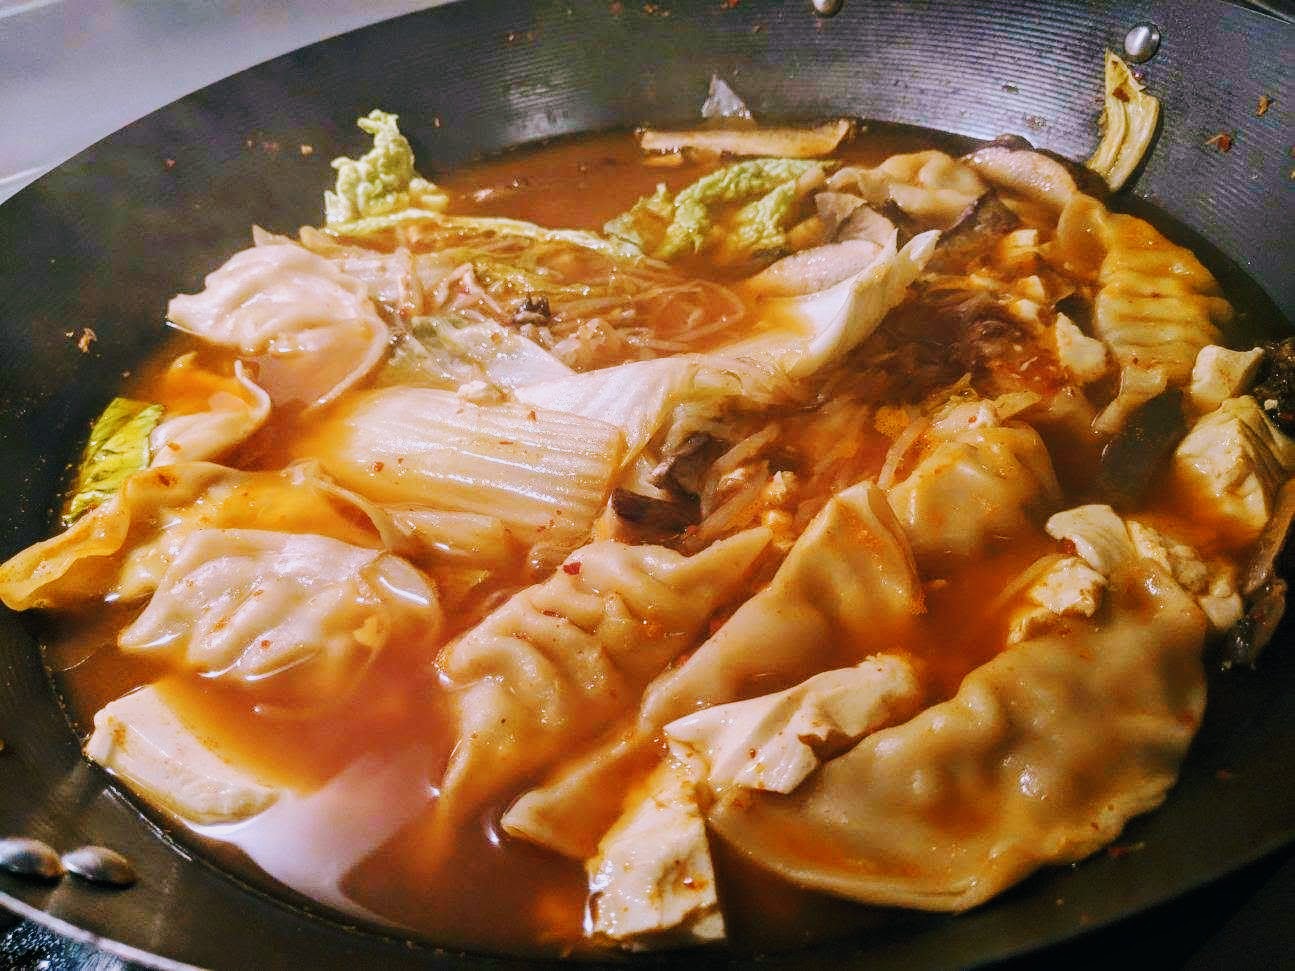 Korean Hot Pot With Dumplings - My Korean Kitchen